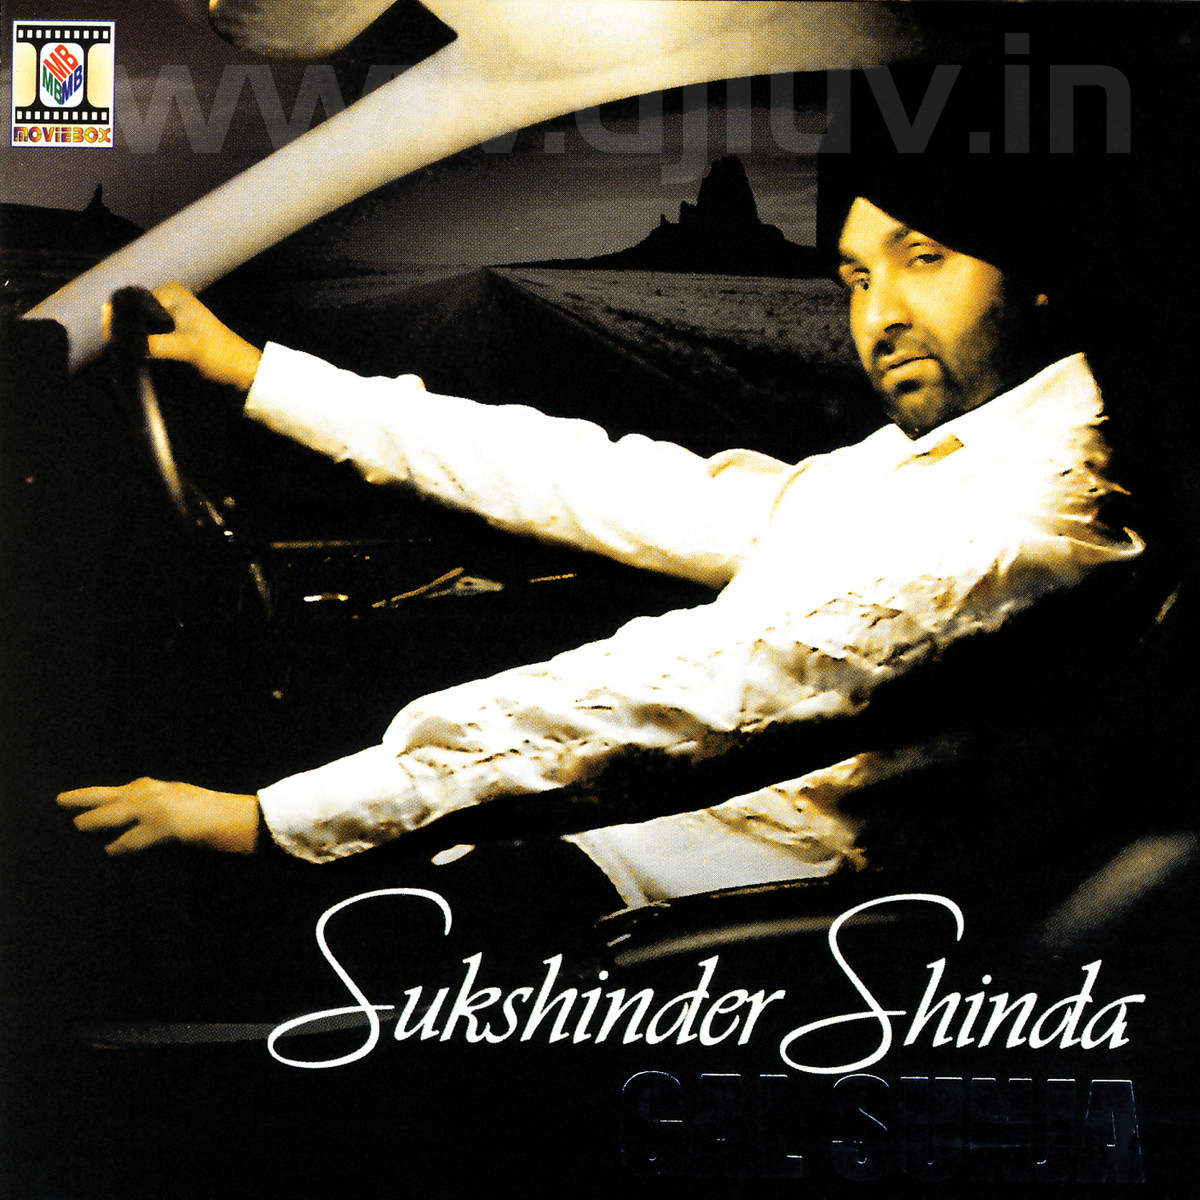 Sukhshinder Shinda